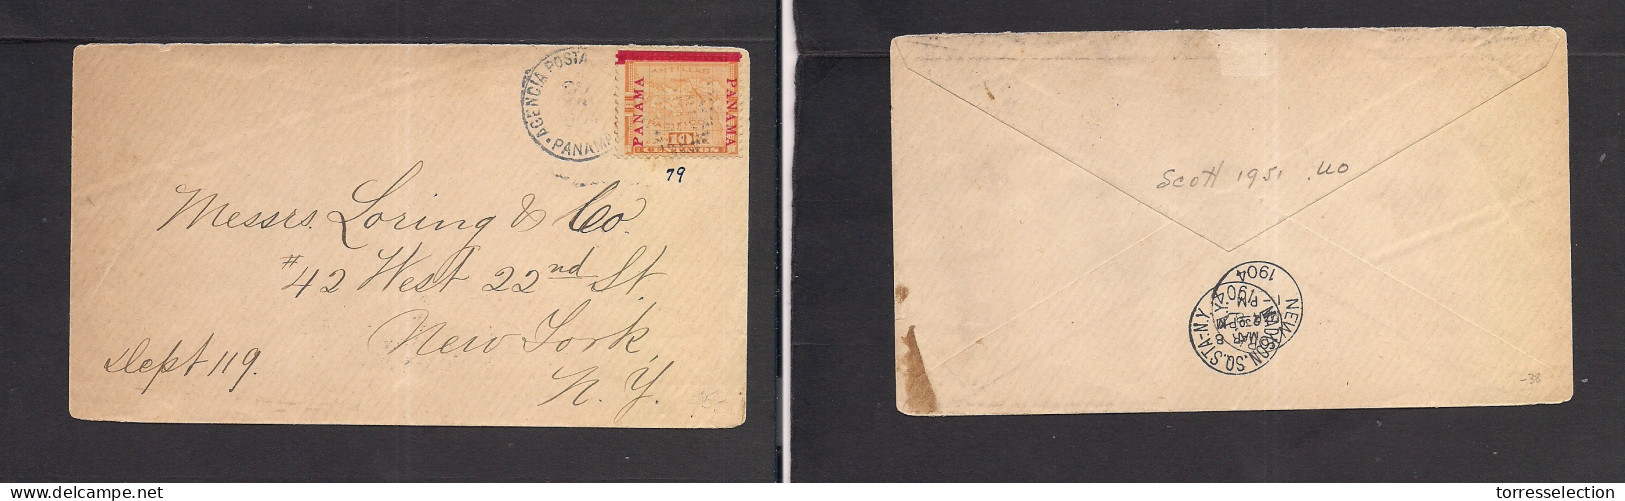 PANAMA. 1904. APN - USA, NYC. Fkd Red Ovptd Issue Envelope. XSALE. - Panama